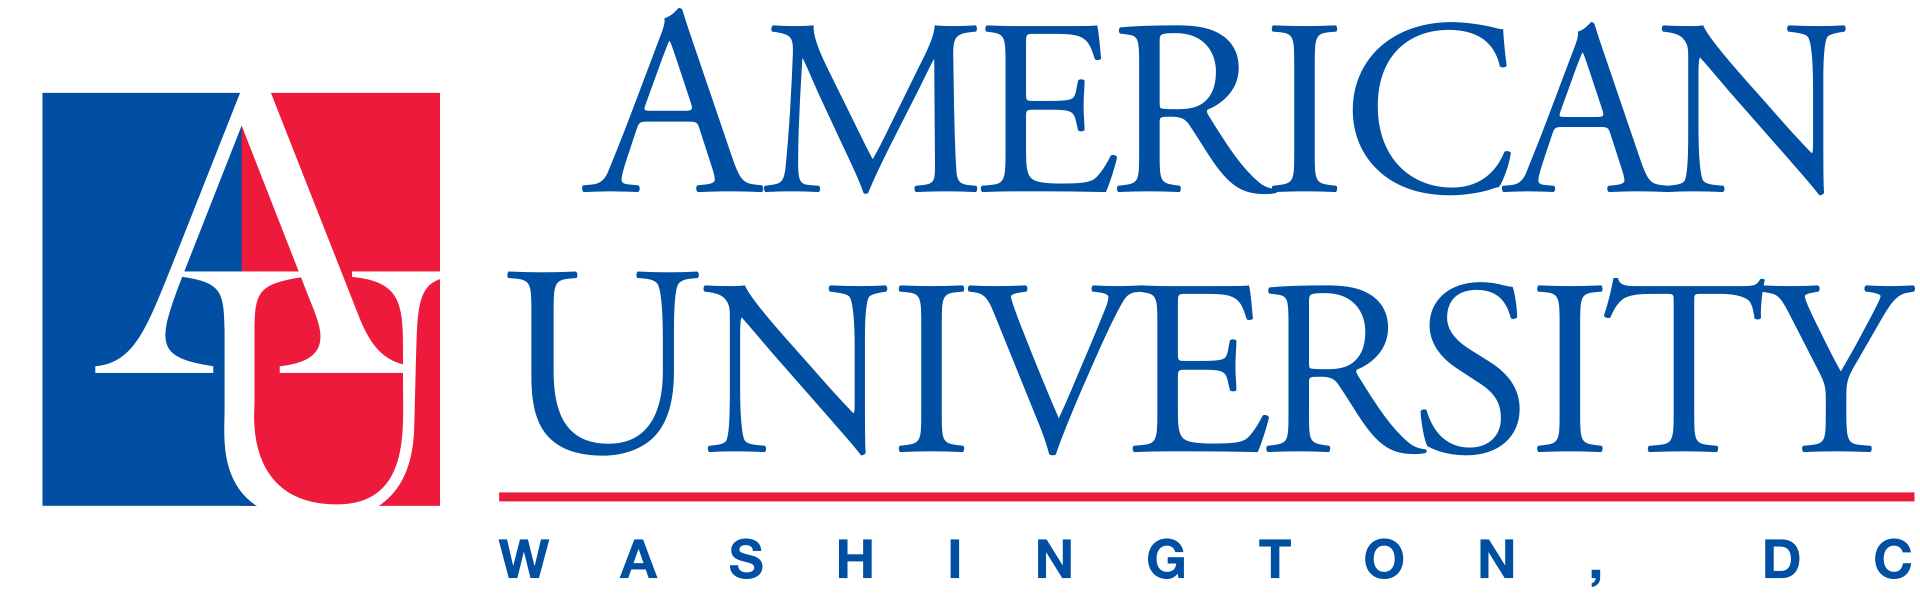 American University logo, By American University - https://www.american.edu, Public Domain, https://commons.wikimedia.org/w/index.php?curid=54500563"